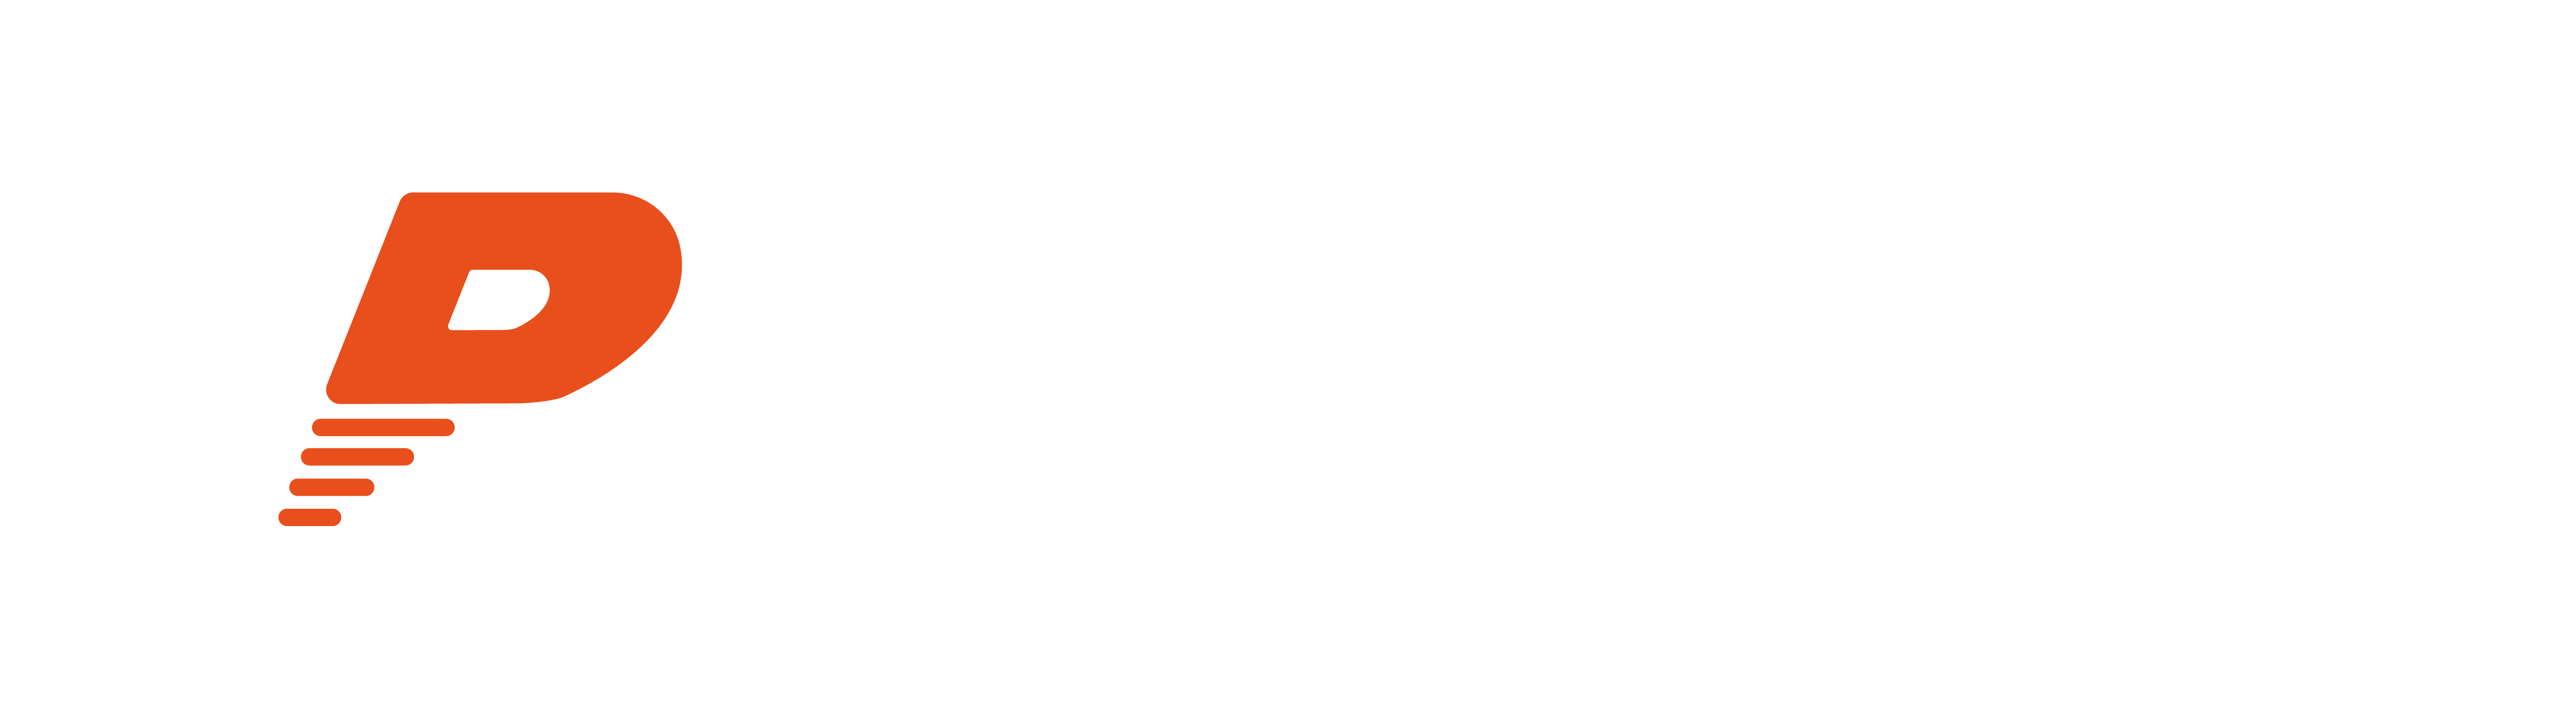 dopal logo